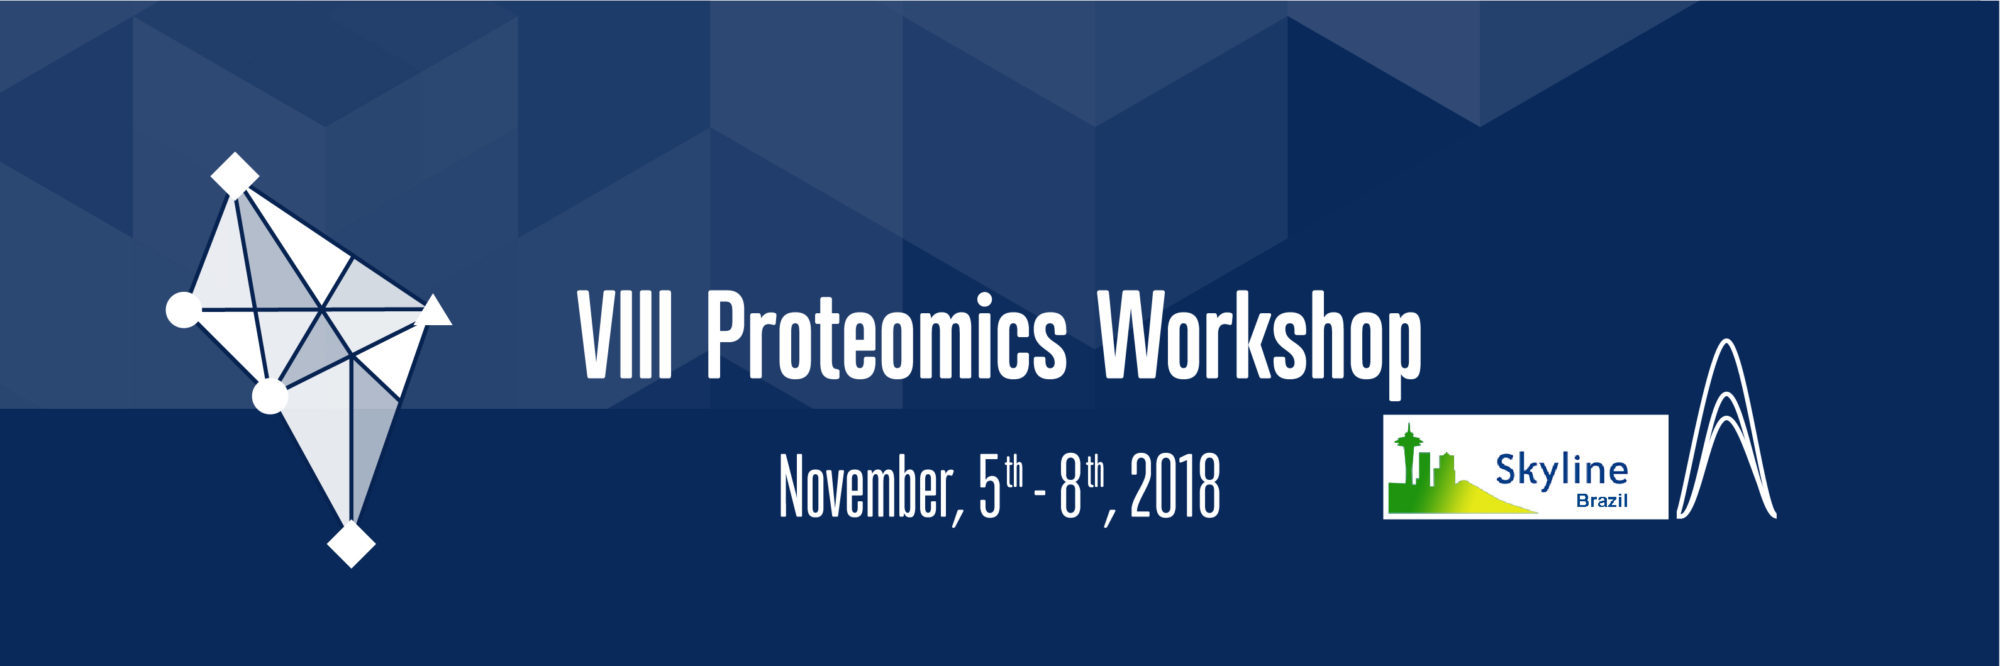 VIII Proteomics Workshop